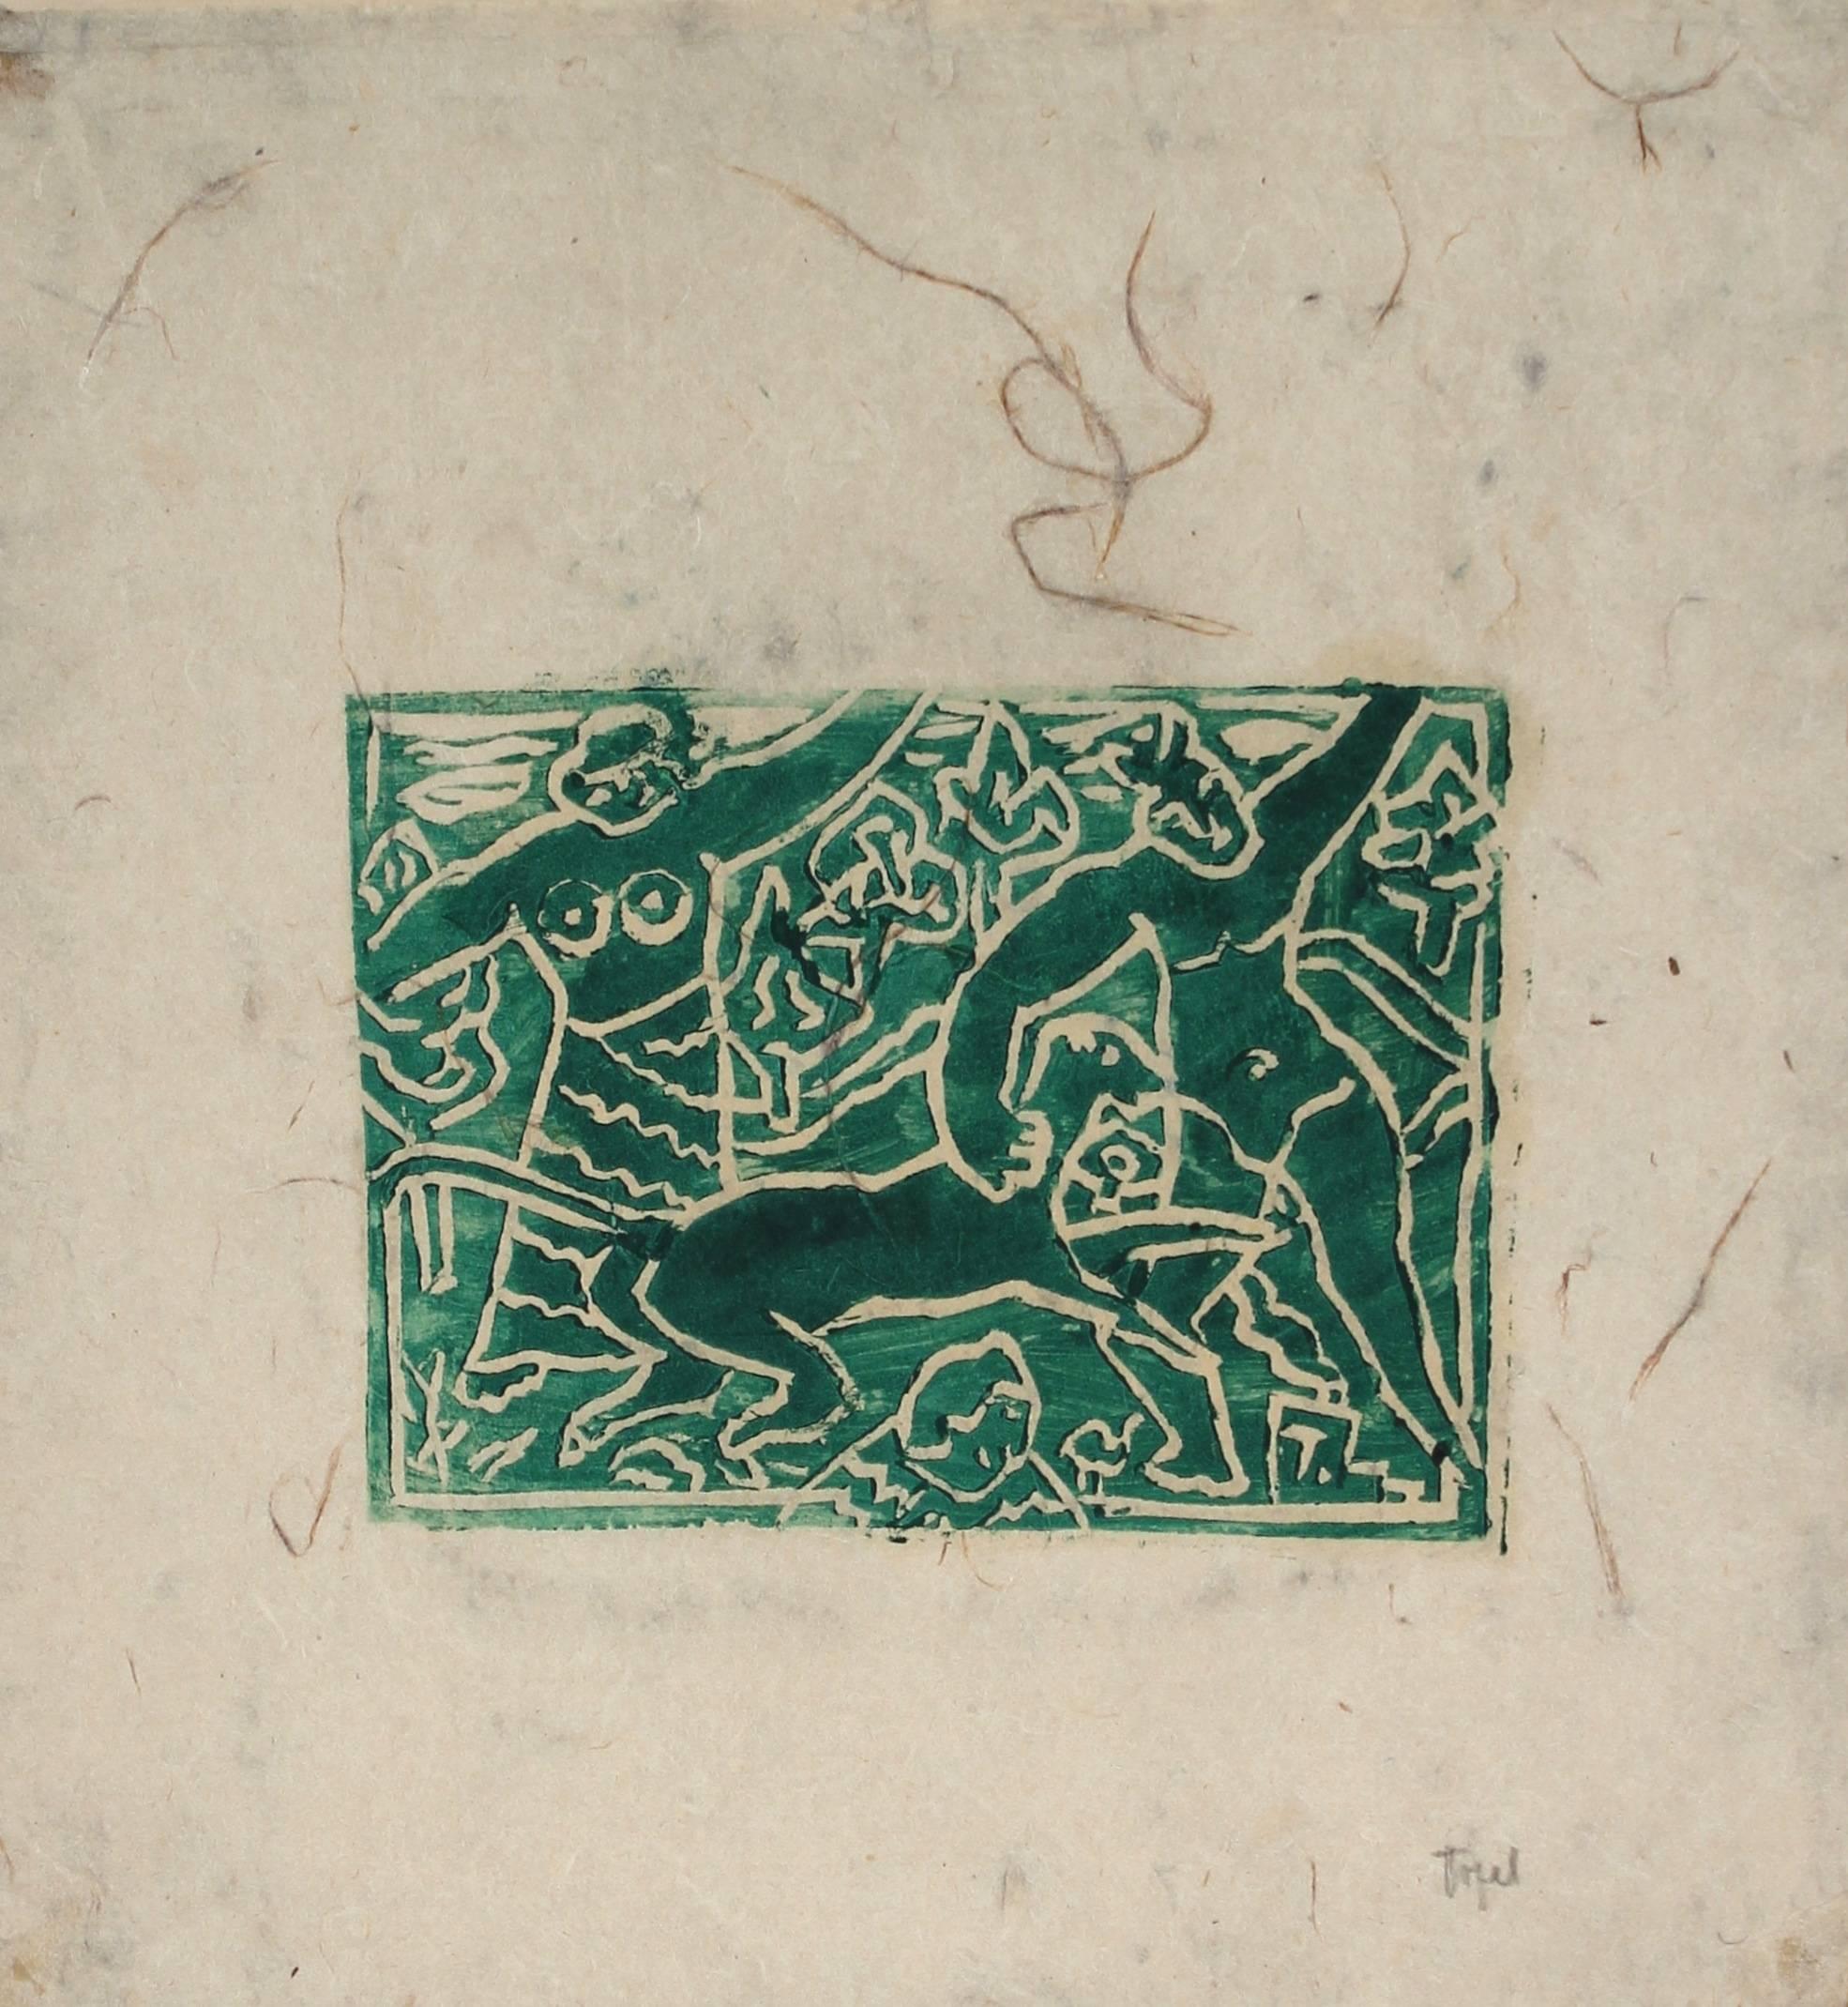 Jennings Tofel Figurative Print - Figurative Woodcut Print in Green Ink, Early 20th Century